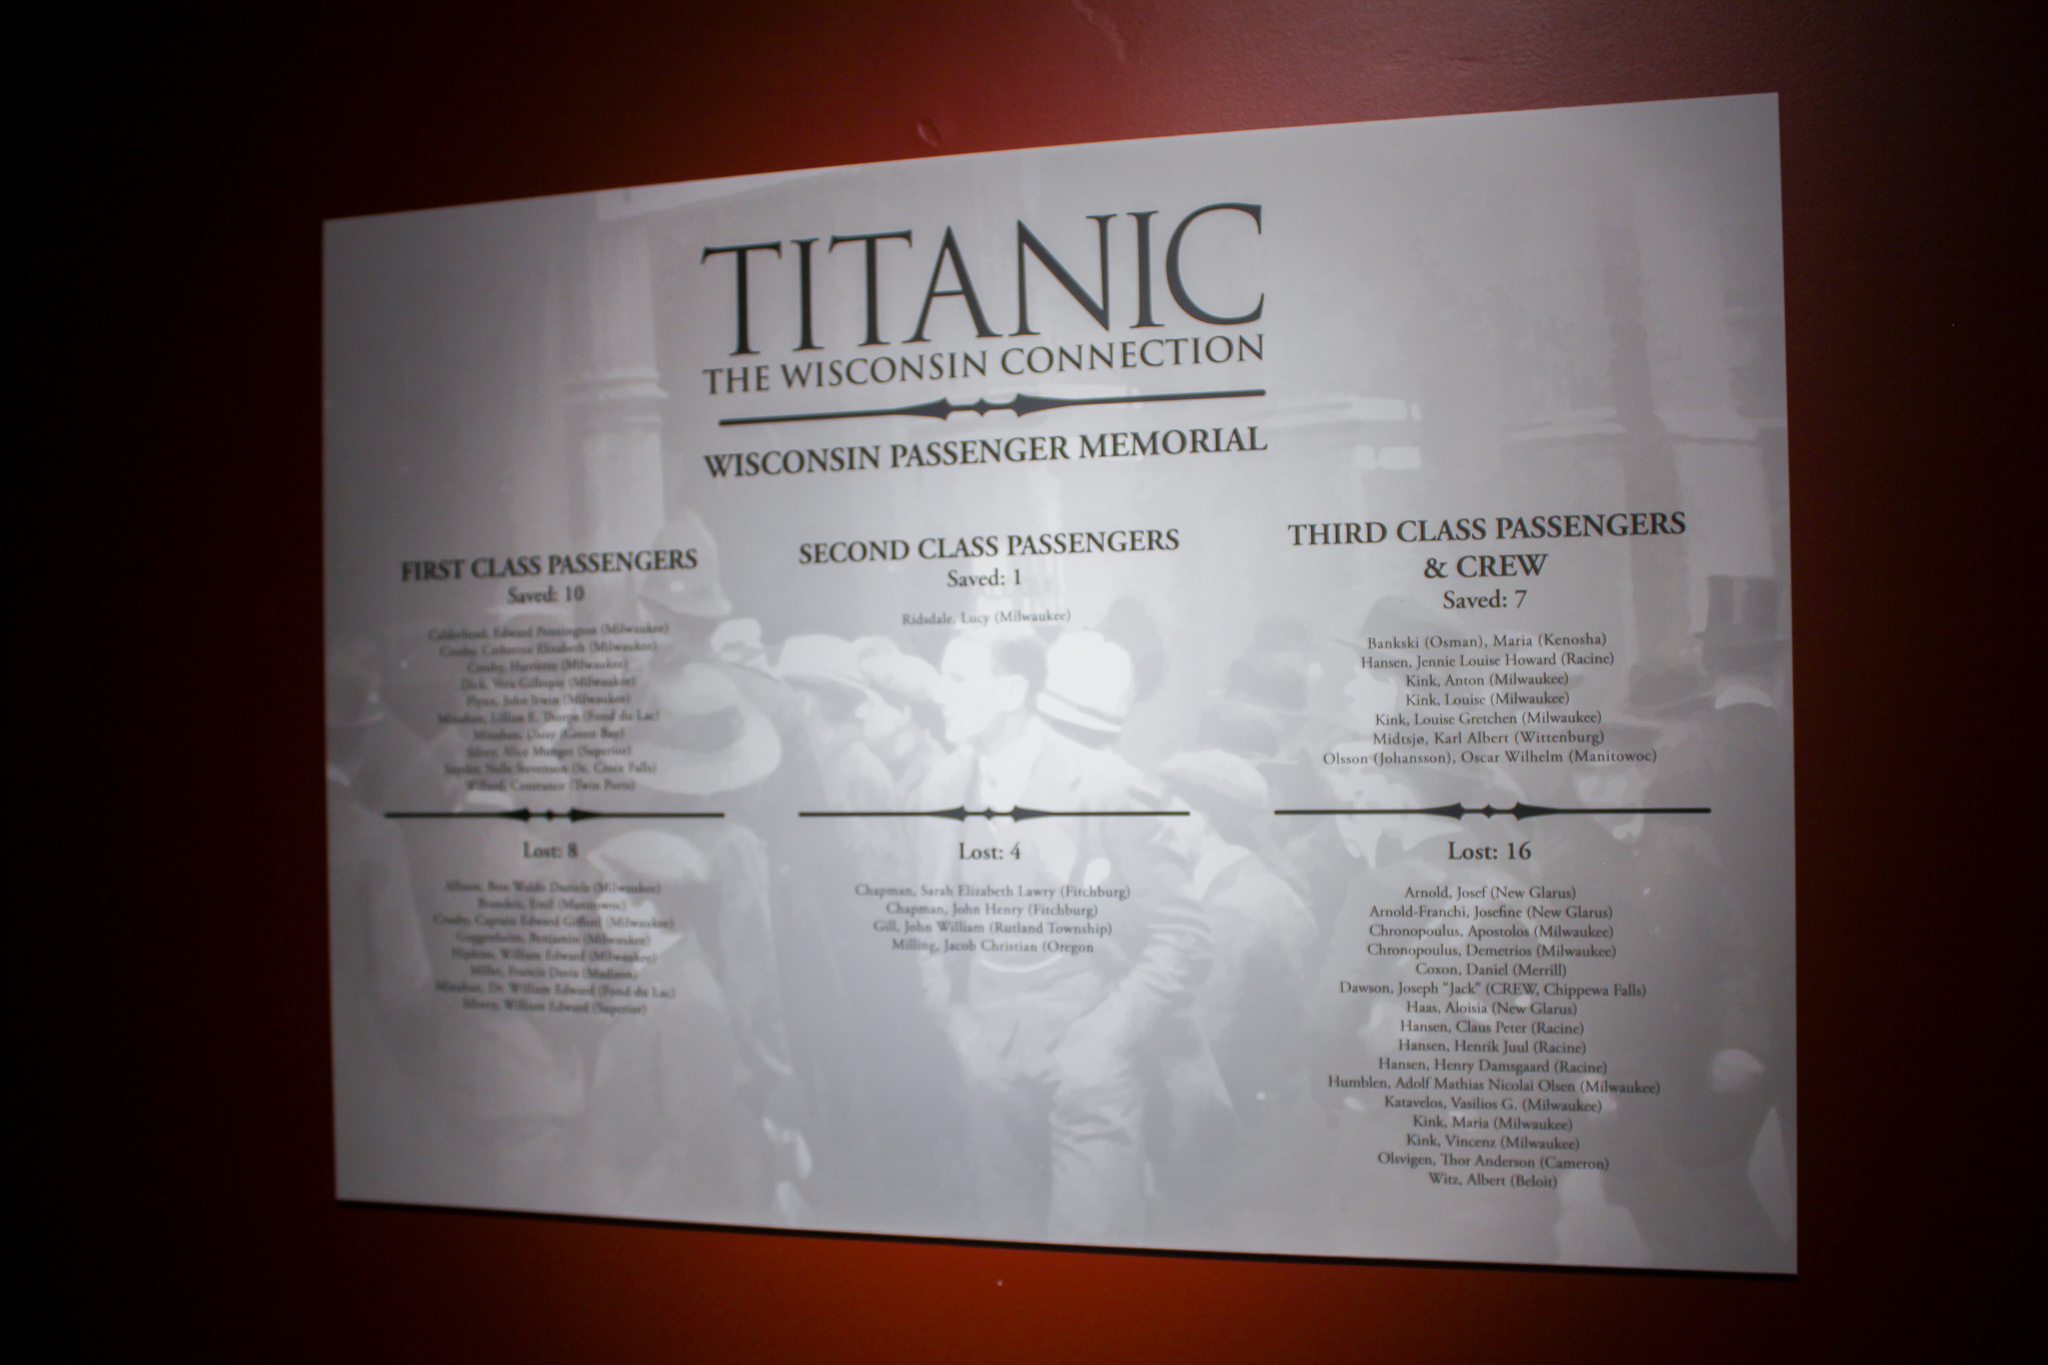 Oshkosh museum unveils Titanic exhibit with Wisconsin ties